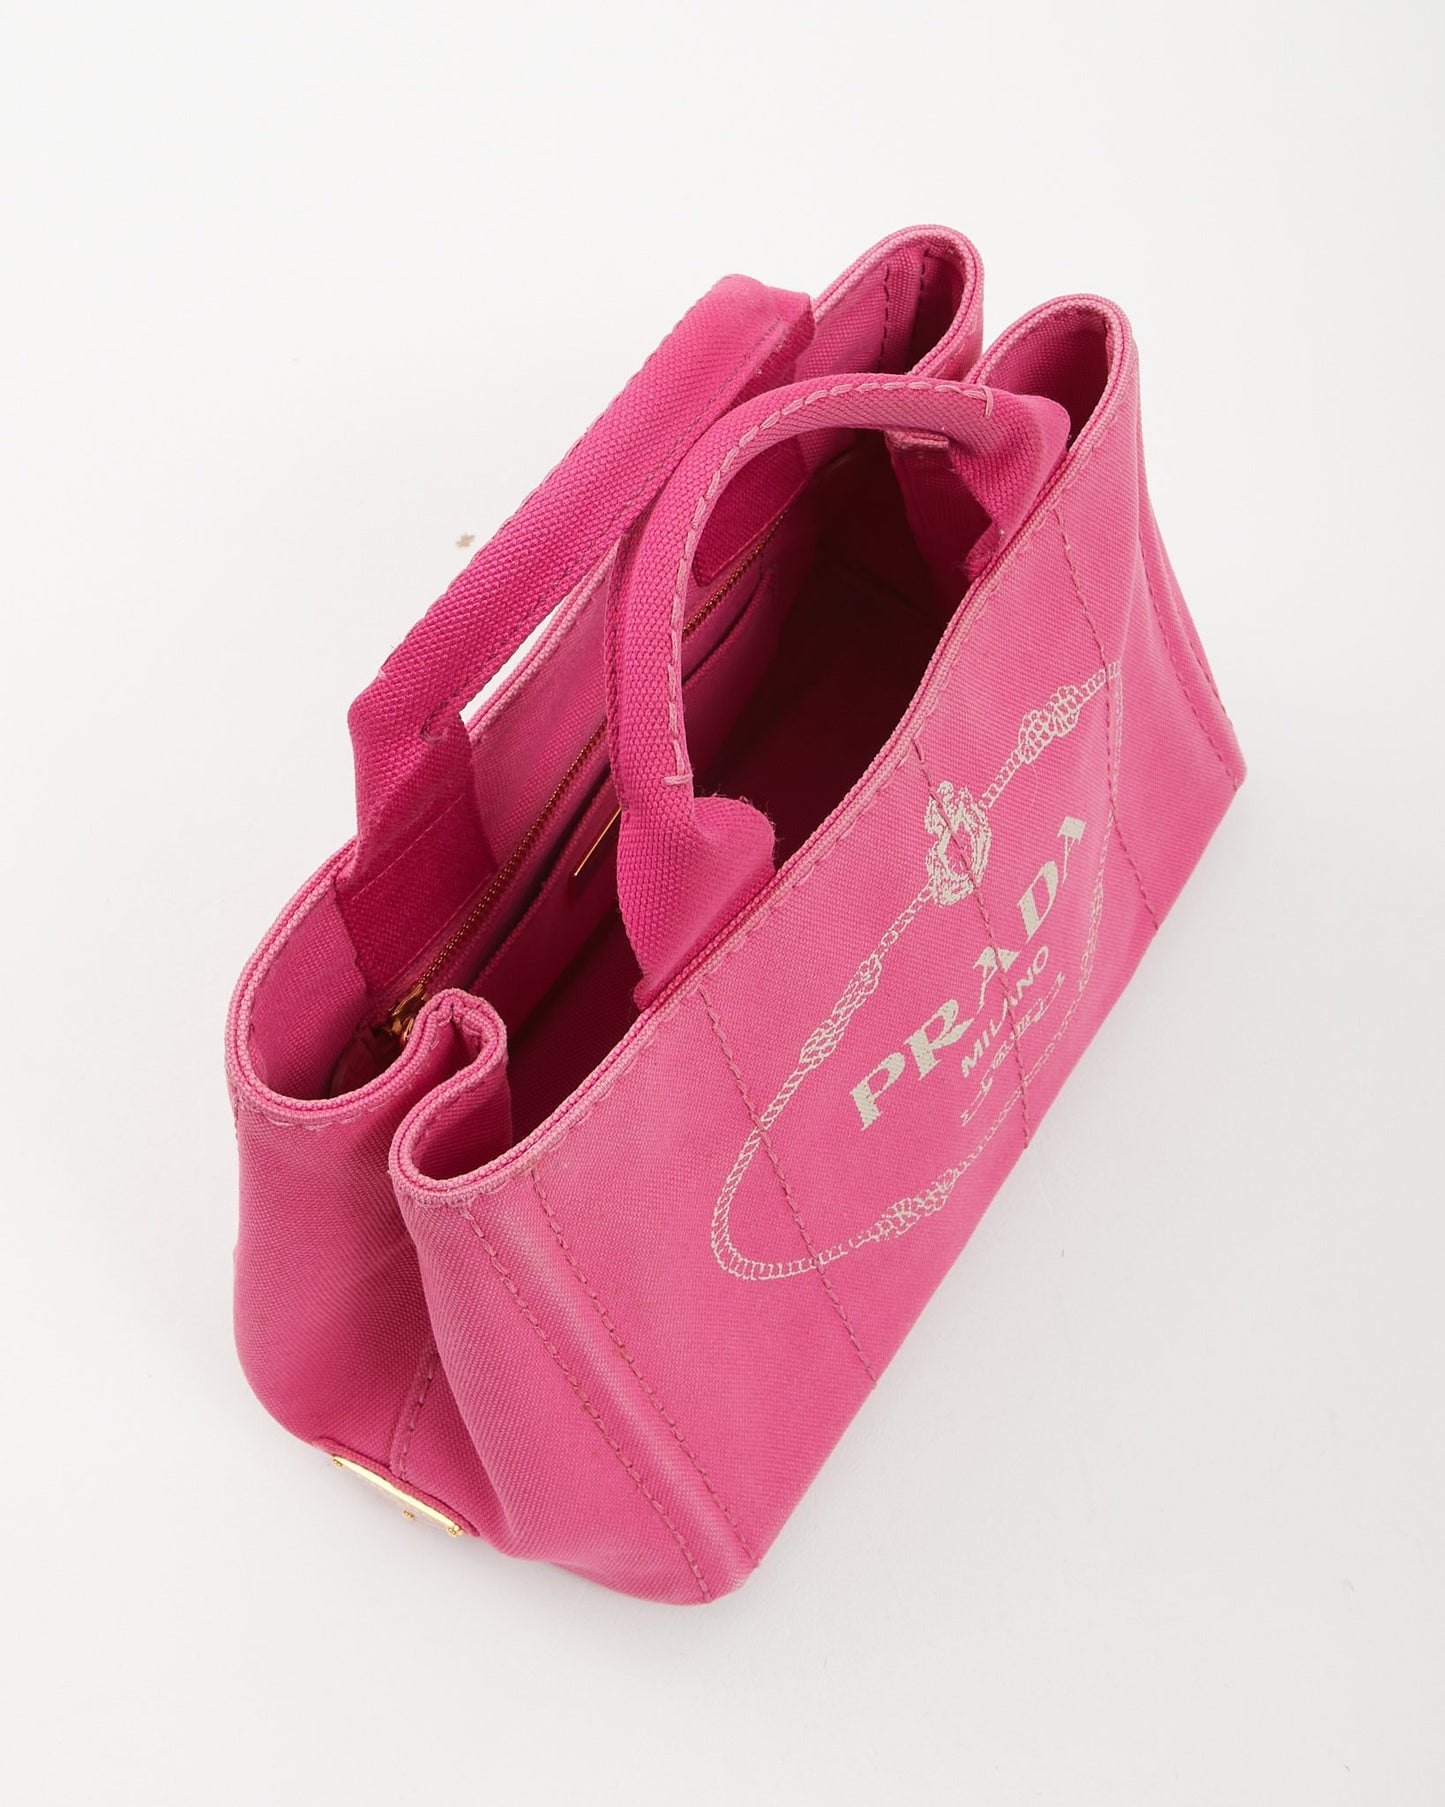 Mini sac fourre-tout avec logo Canapa en toile rose Prada